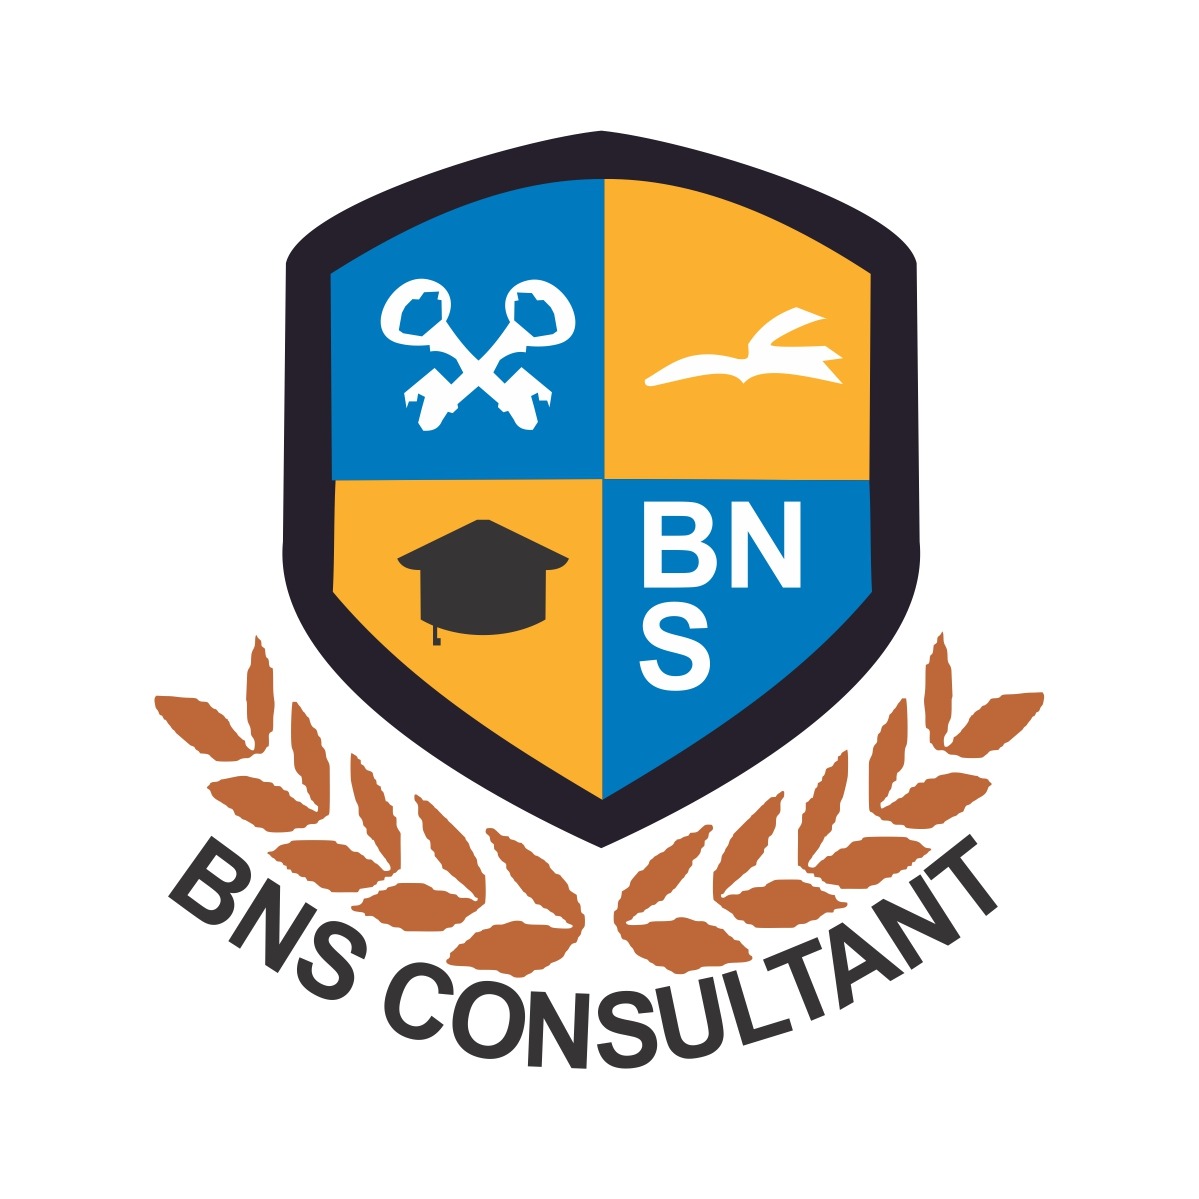 BN STUDY CONSULTANTS